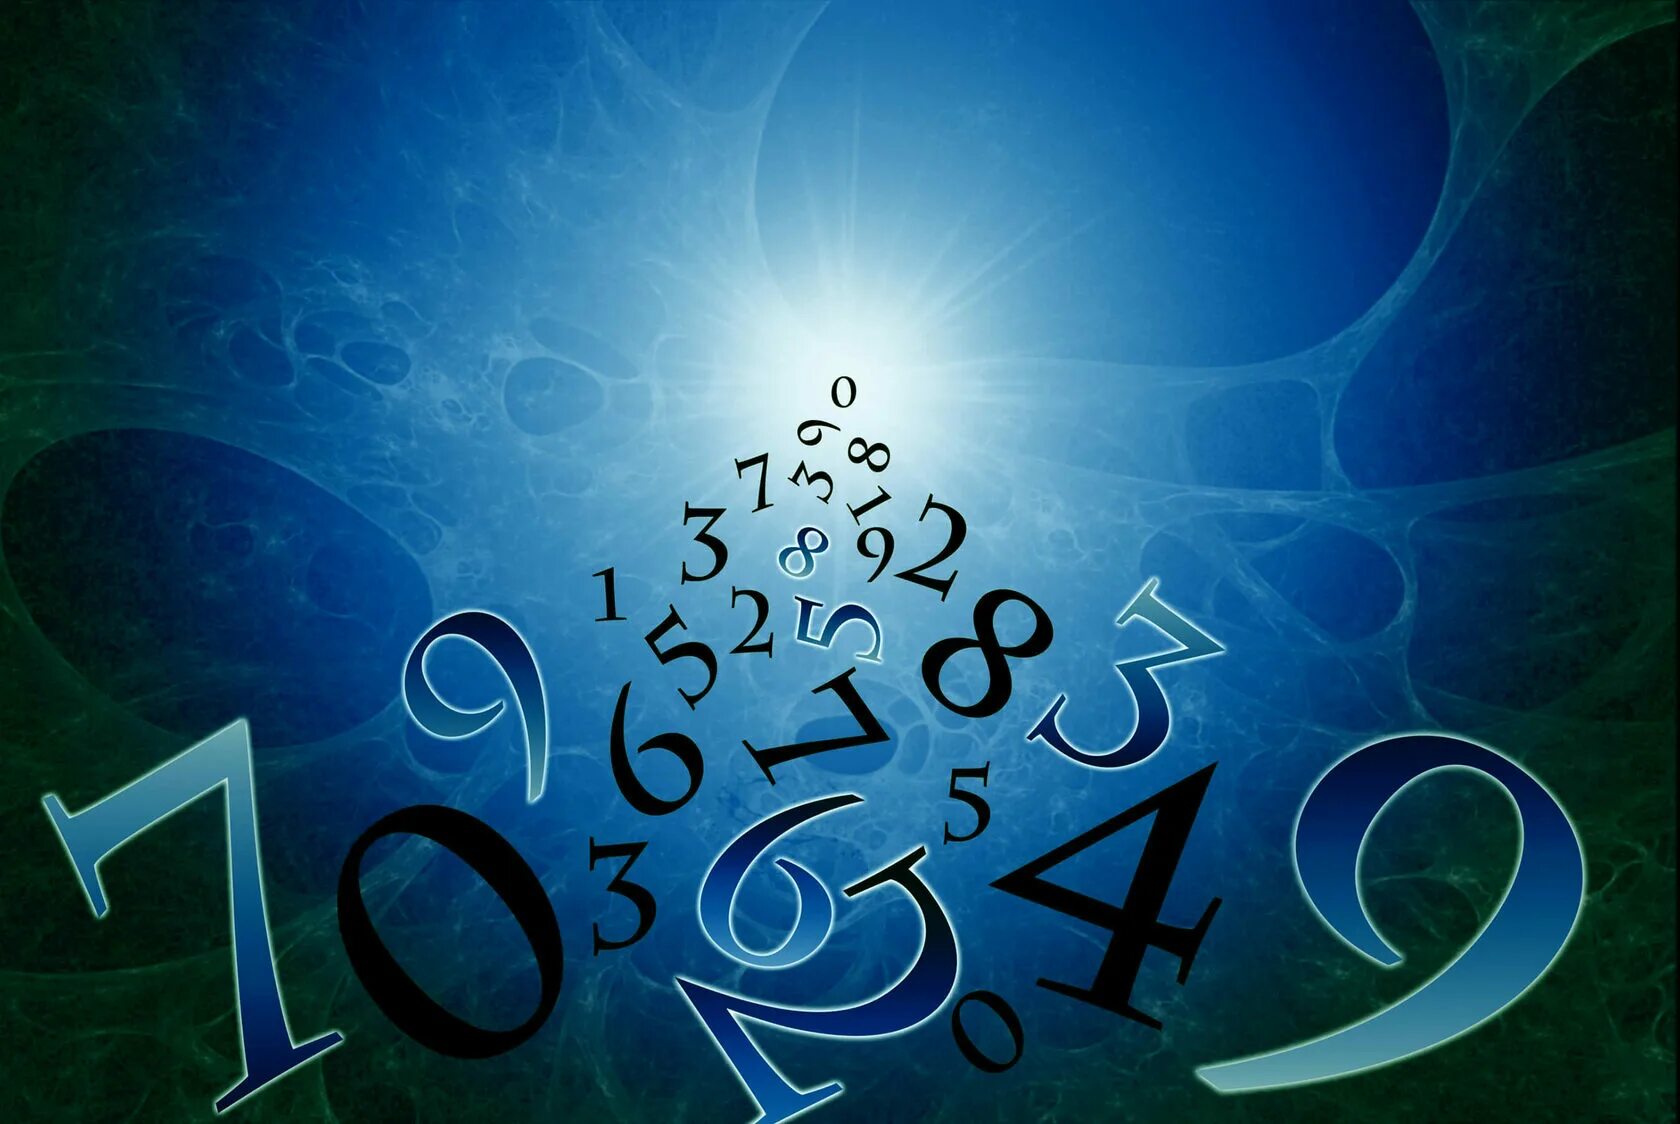 Нумерология. Магия цифр. Дата рождения нумерология. Числовая магия. Нумеролог предсказания